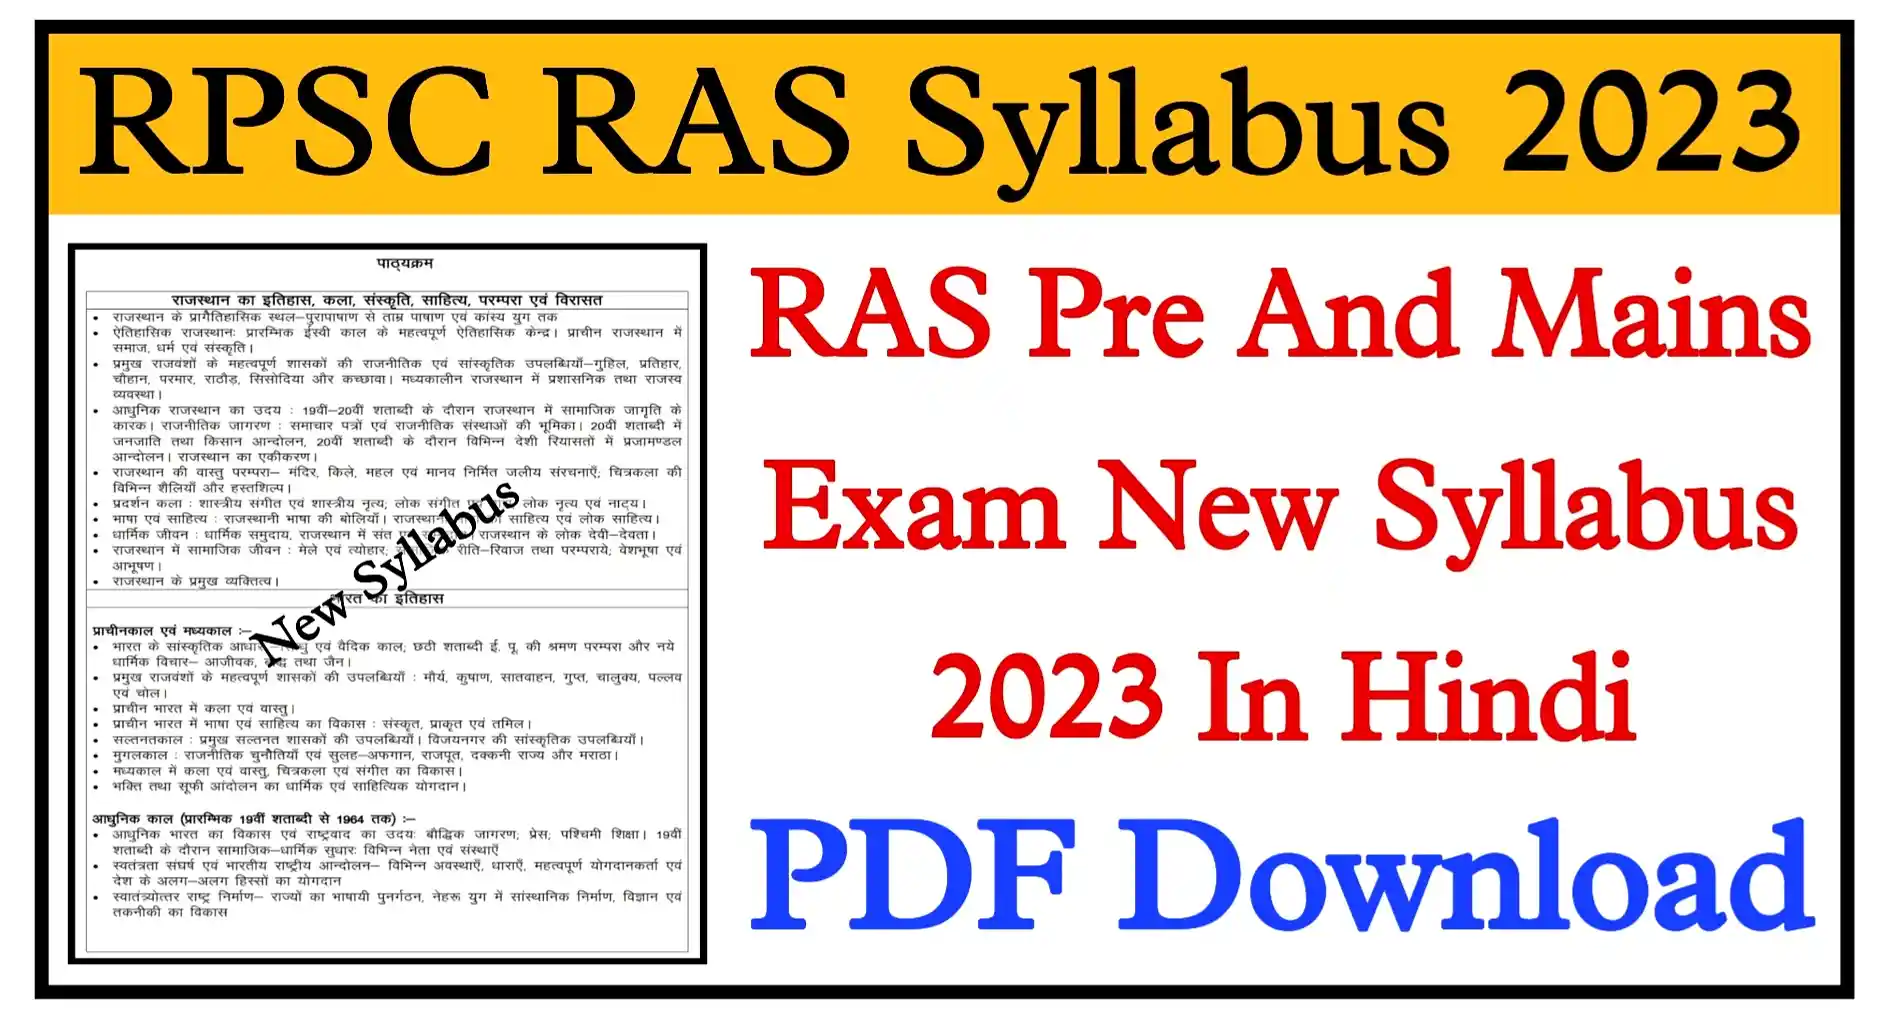 RPSC RAS Syllabus 2023 In Hindi RAS Pre Exam And Mains Exam New Syllabus PDF Download Link